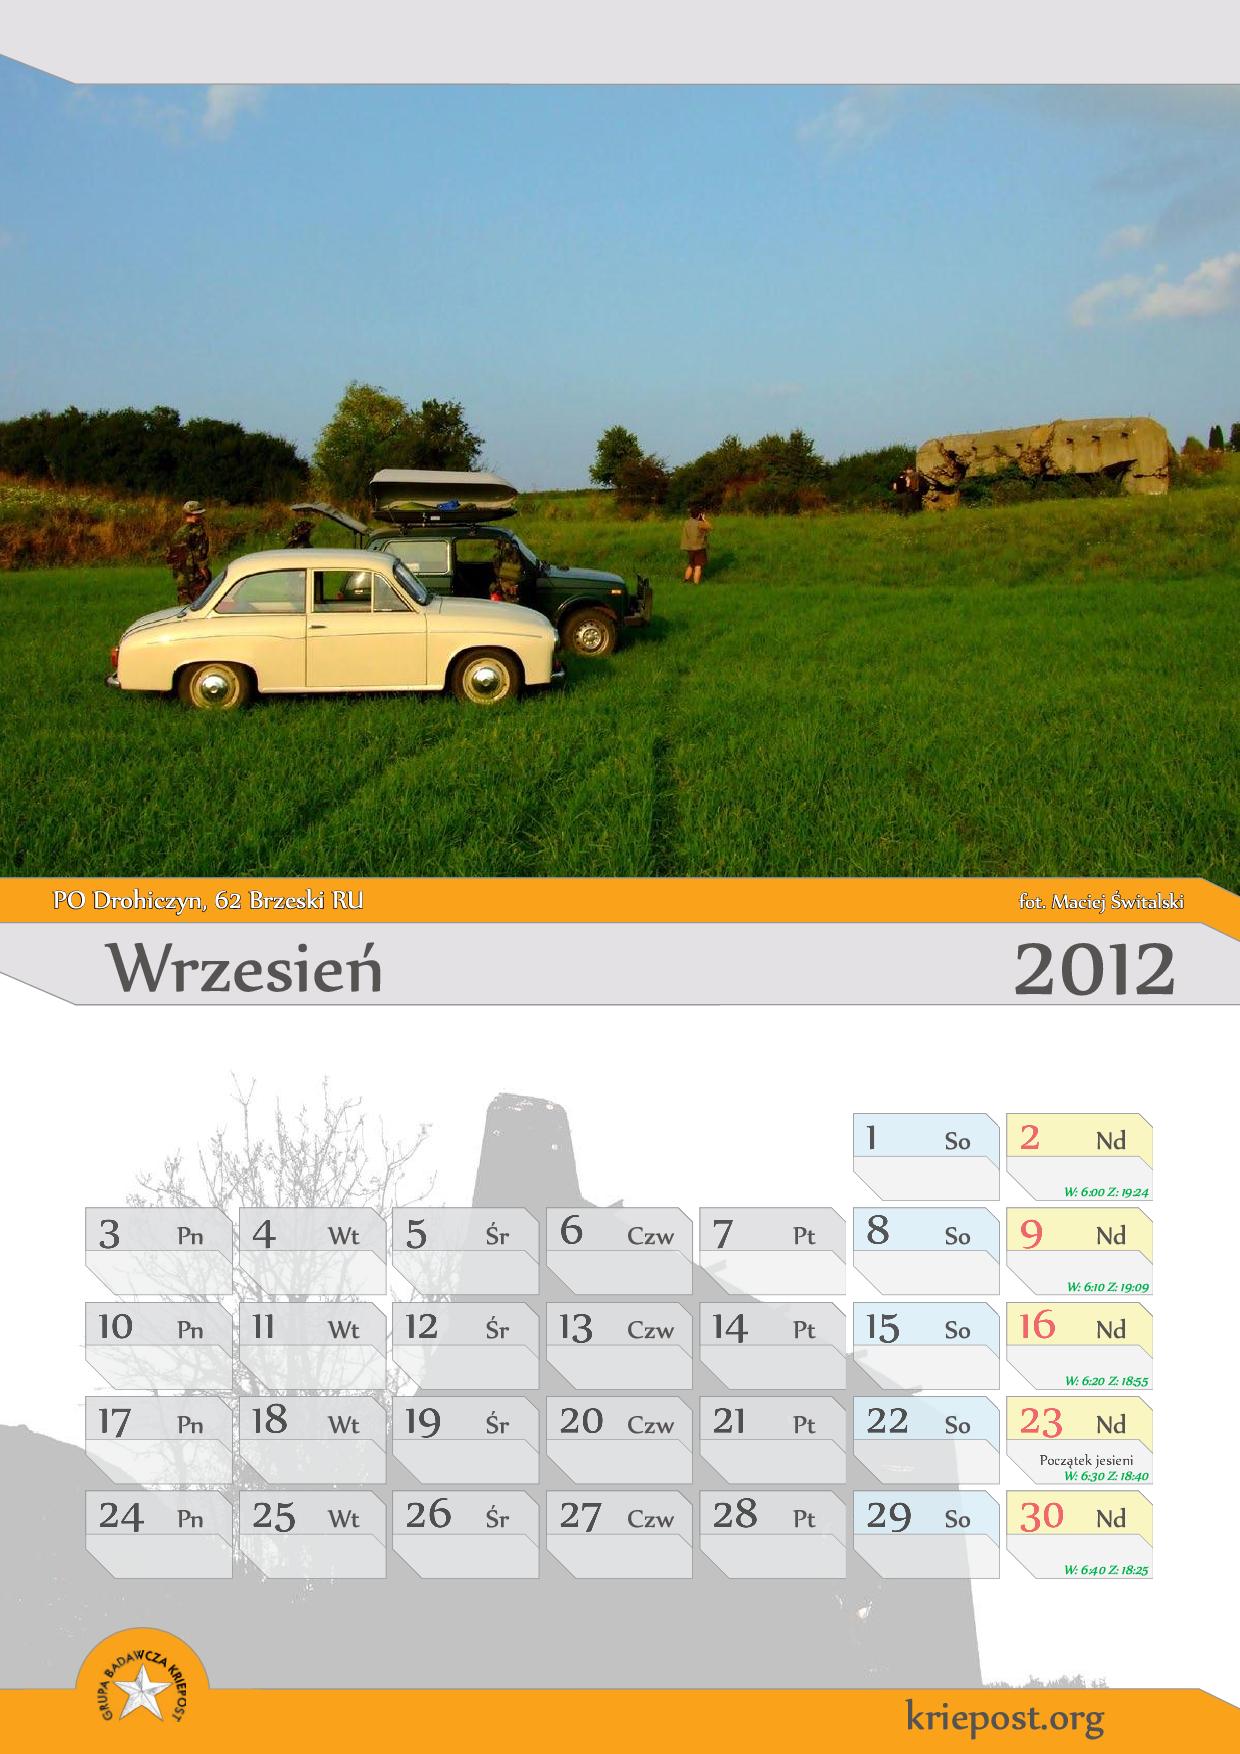 GB Kriepost kalendarz 2012 wrzesień